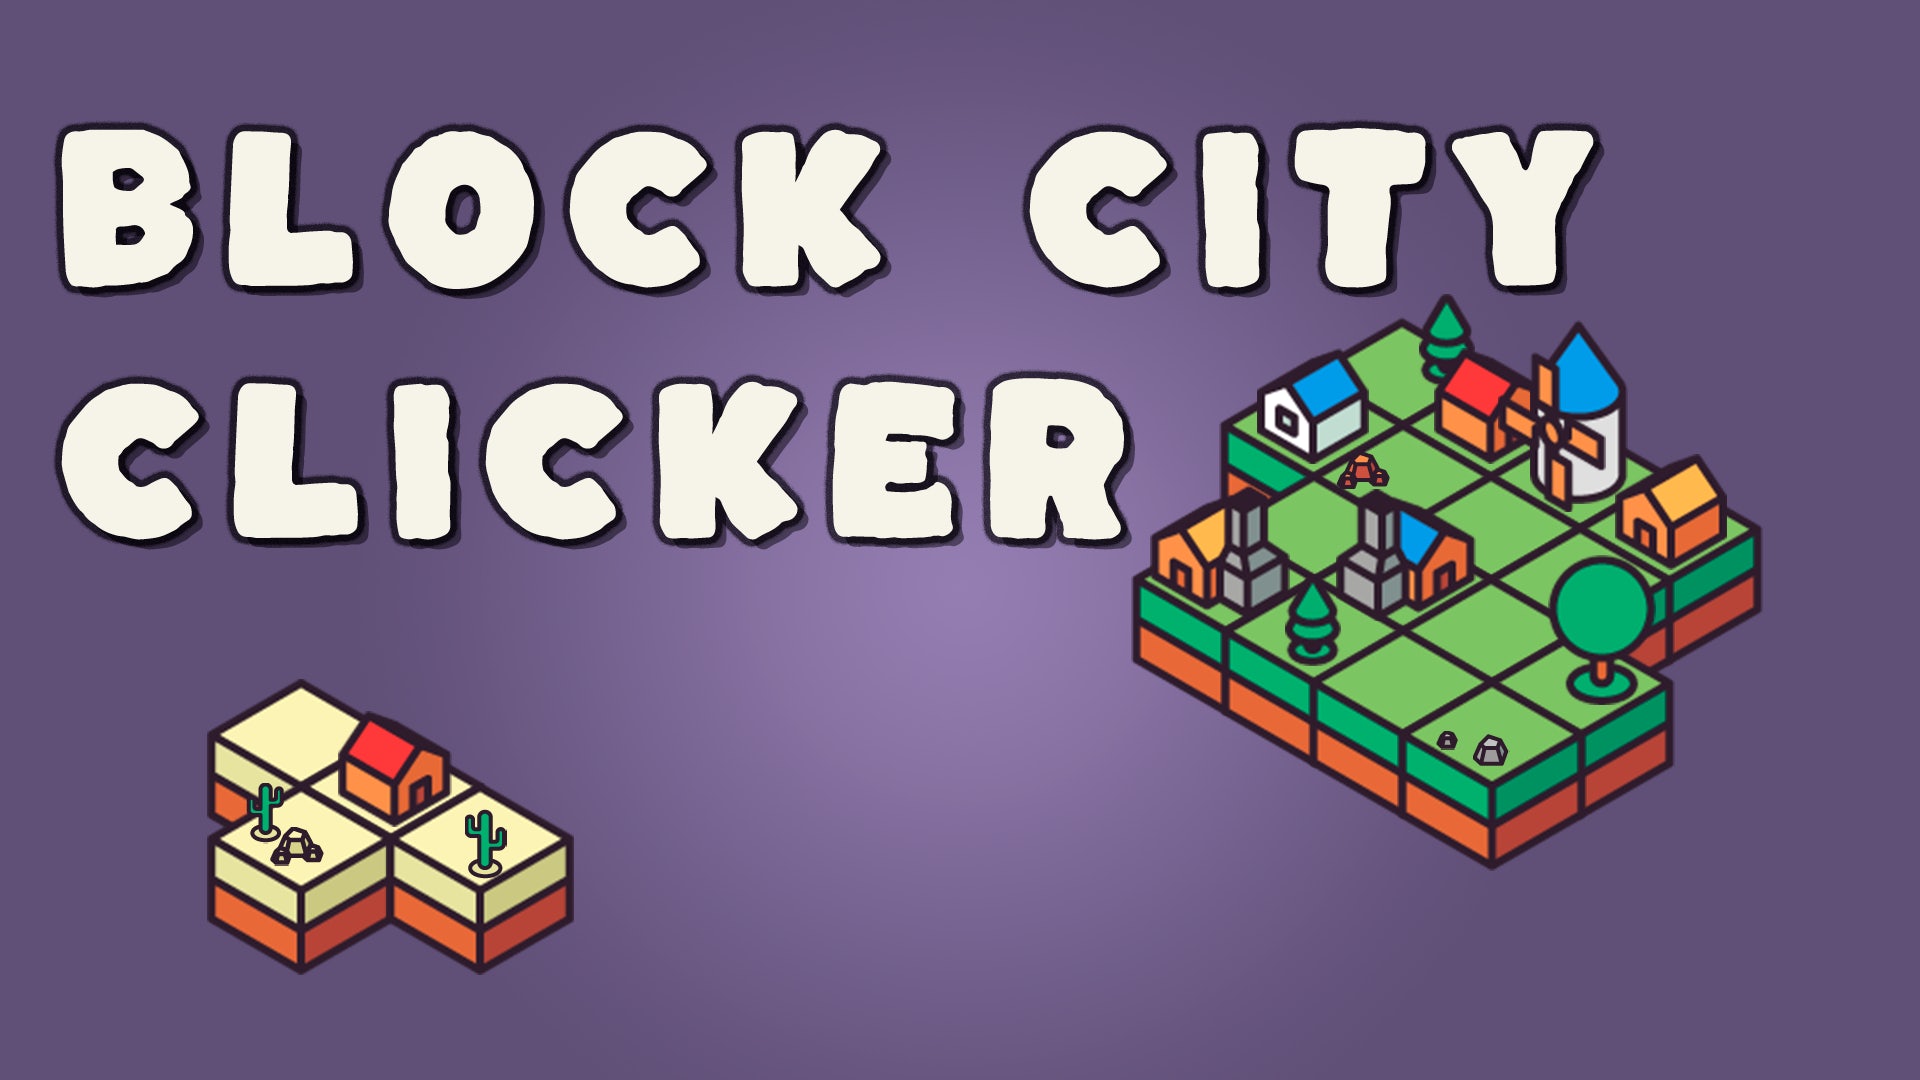 Block City Clicker